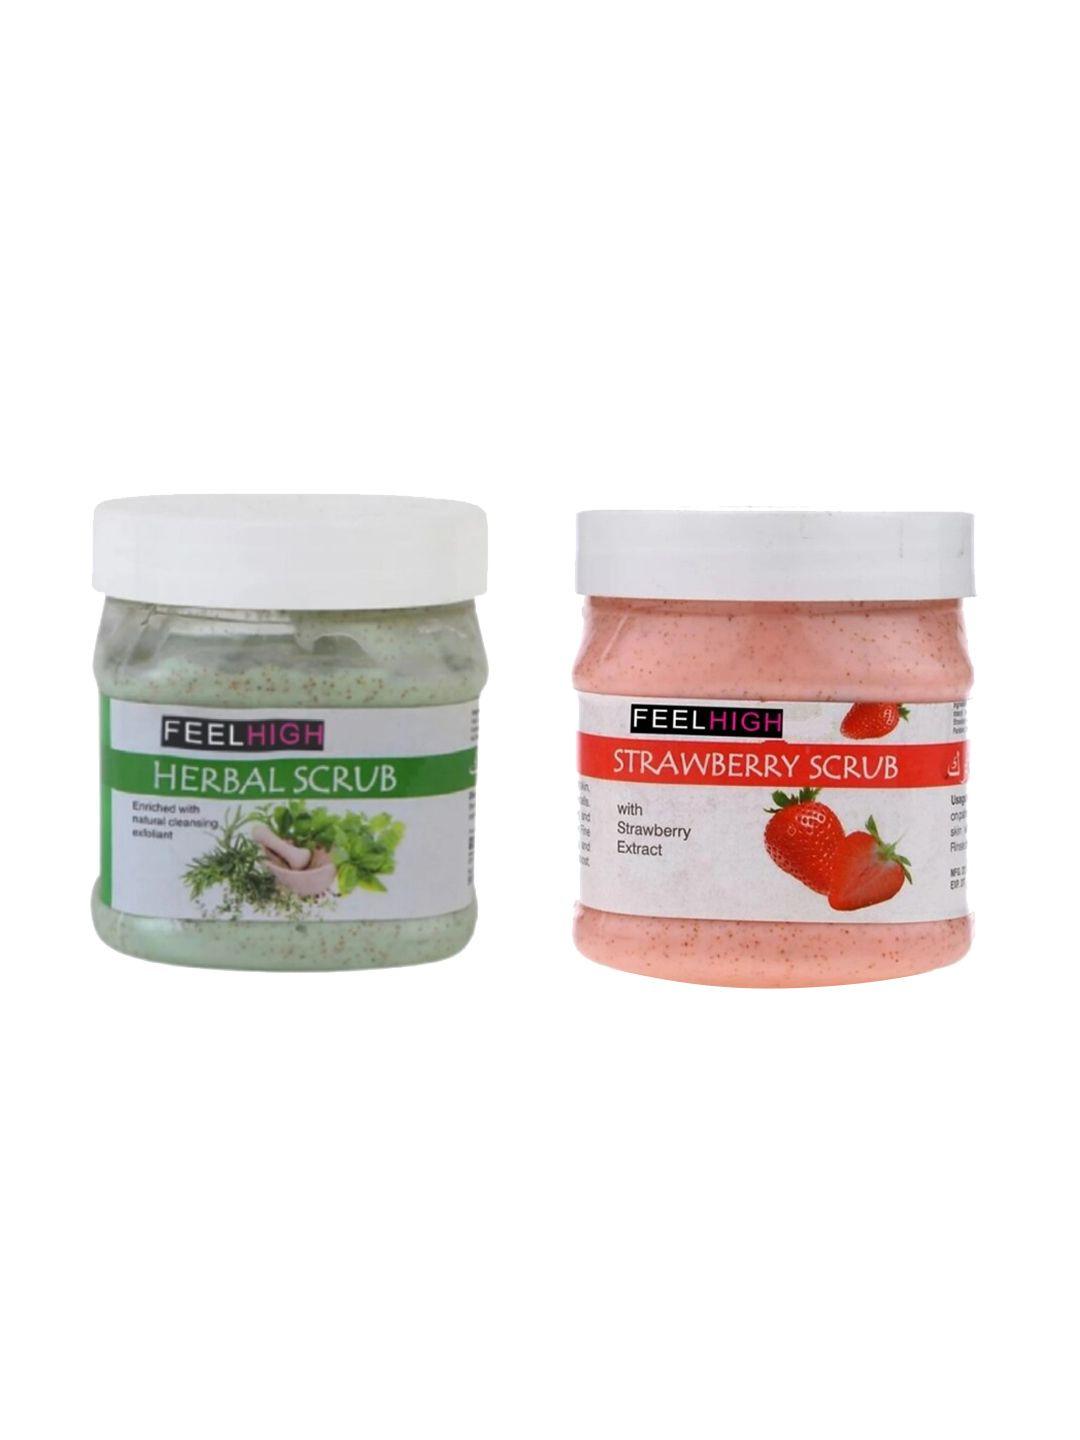 feelhigh set of 2 herbal & strawberry face scrubs - 500 ml each